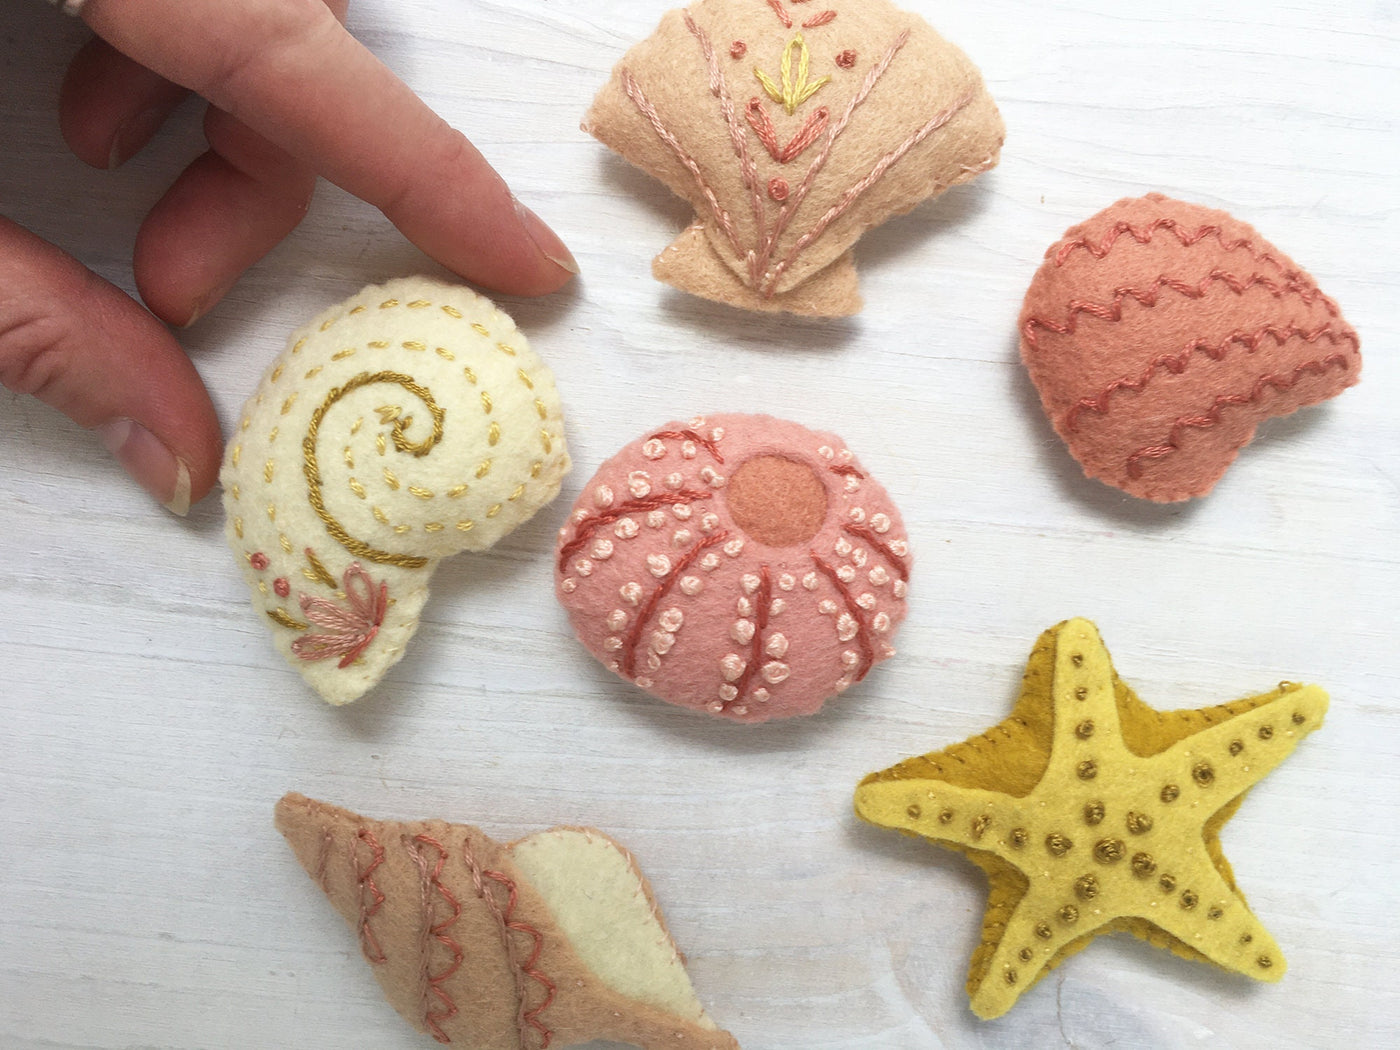 Felt Seashells sewing pattern for shells and beach decor